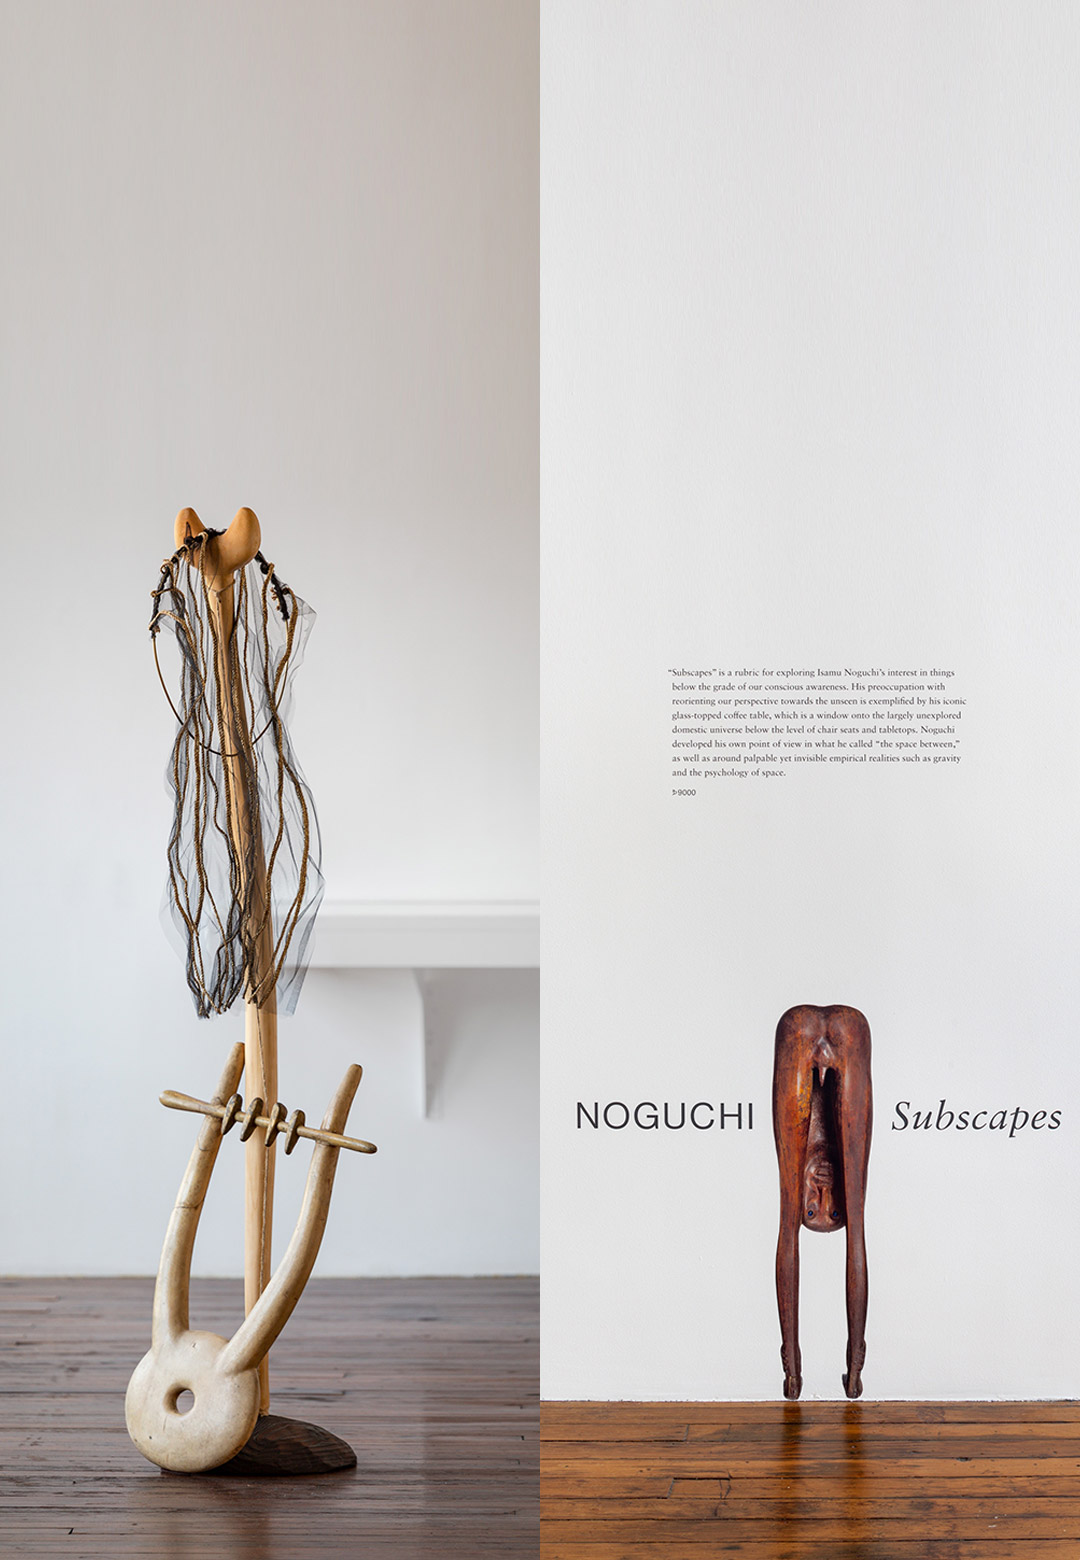 ‘Noguchi Subscapes’ explores Isamu Noguchi's spatial metaphors of the unknown